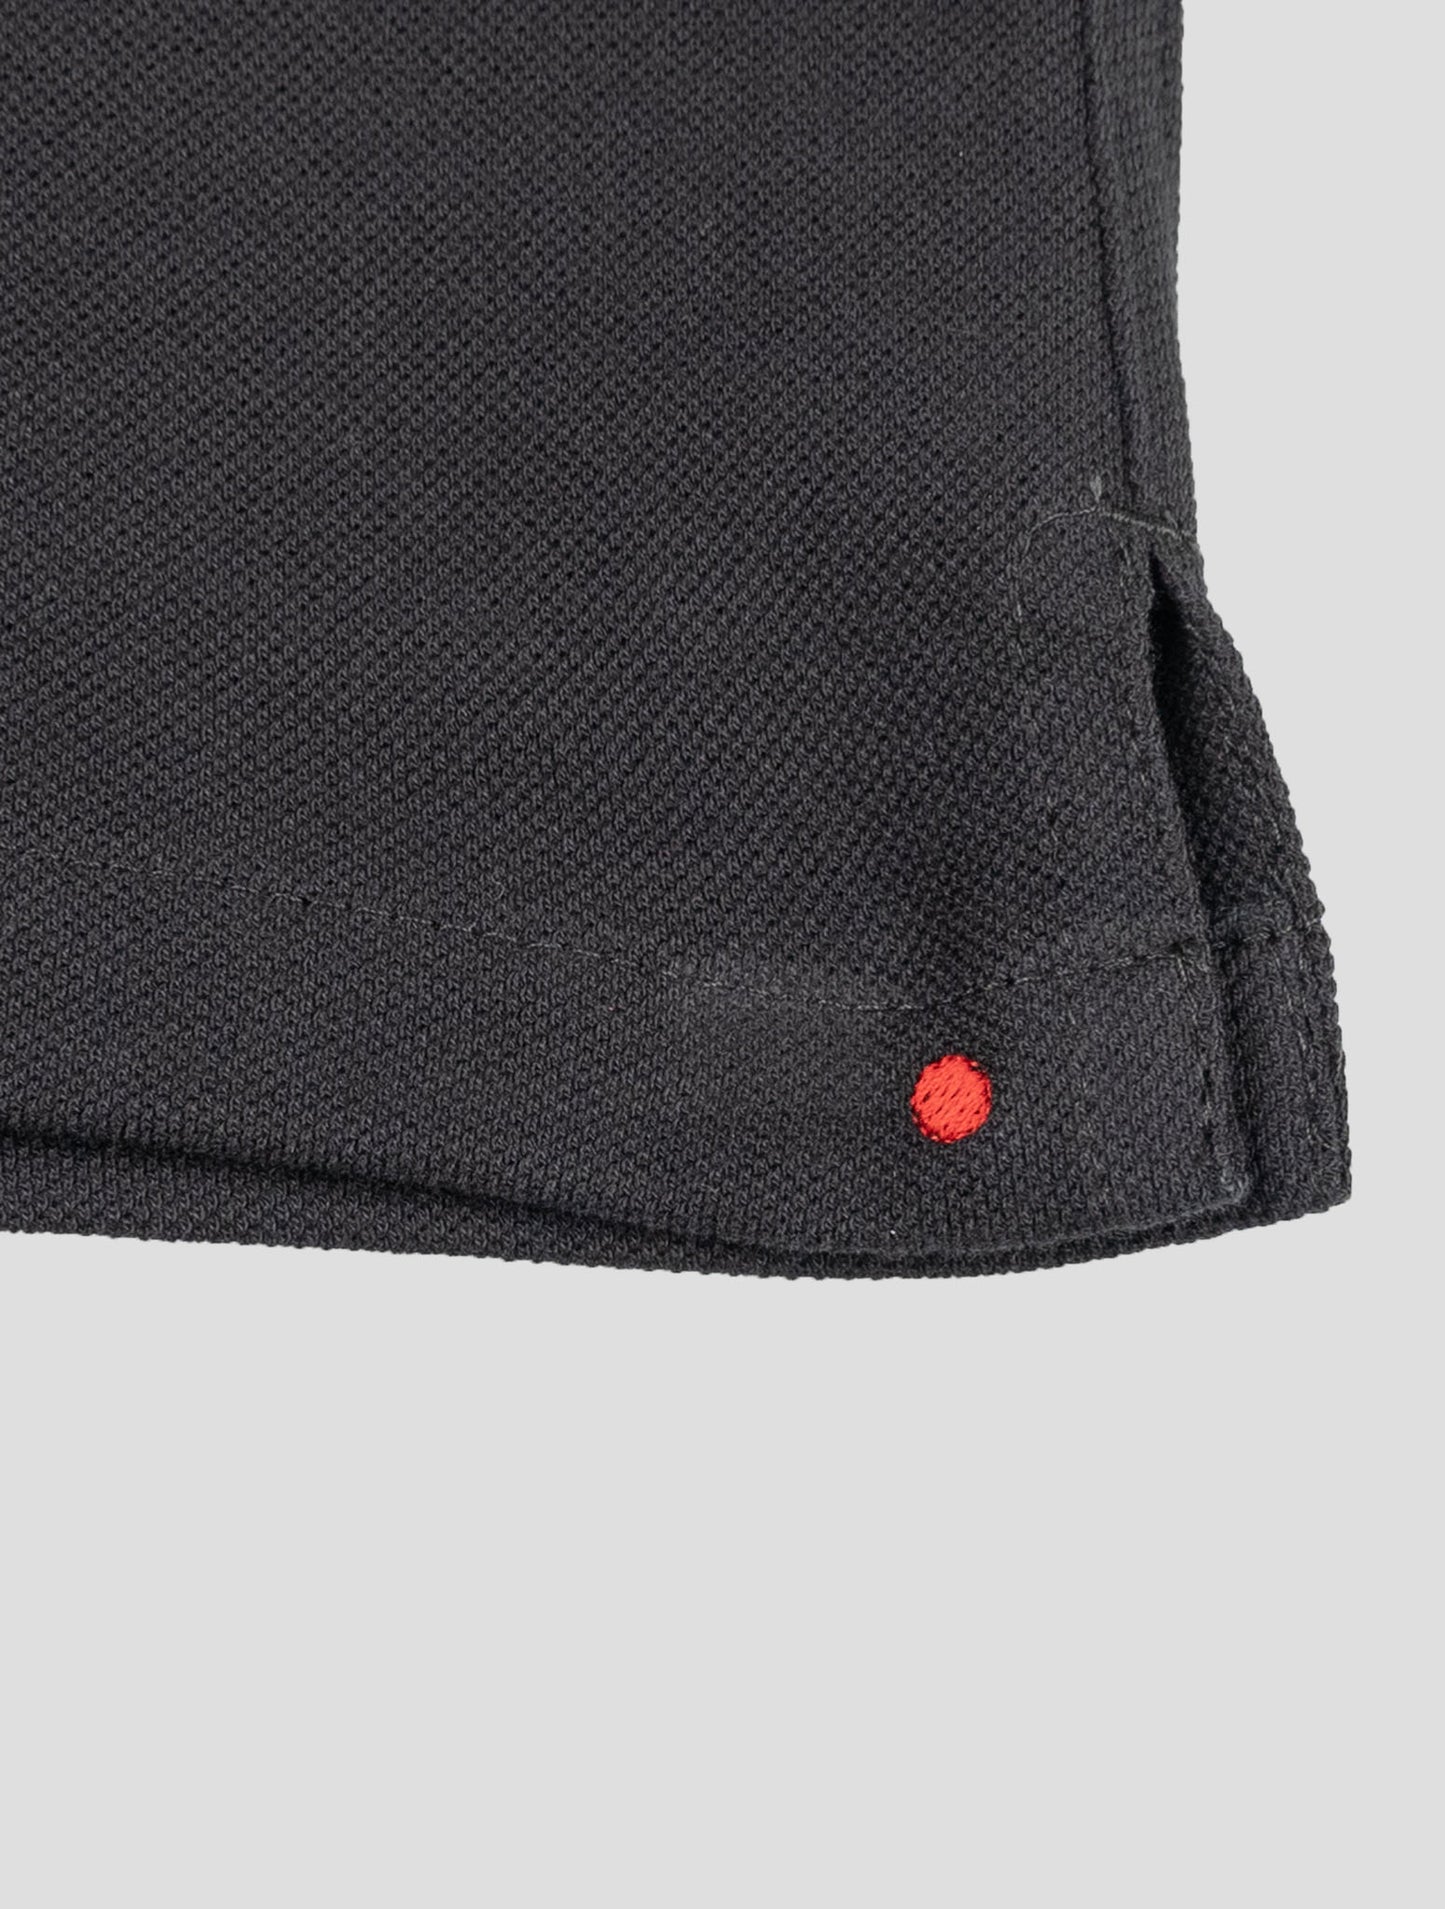 Kiton Matching Outfit-Graue Umbi und schwarze kurze Hosen Trainings anzug